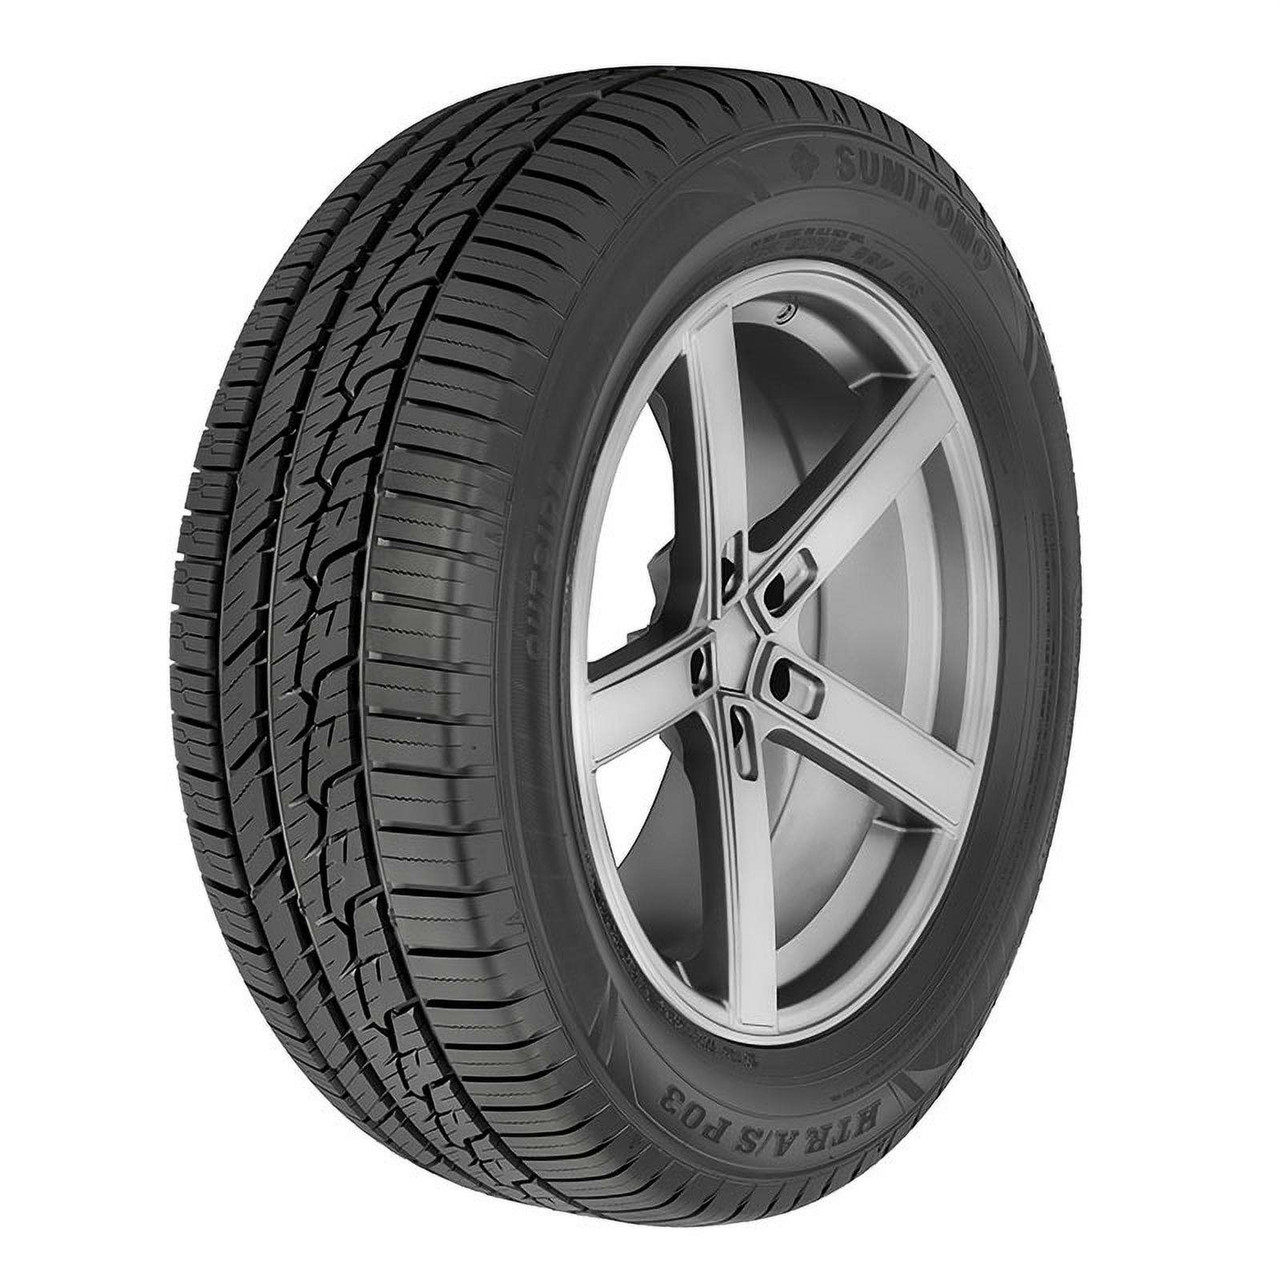 Sumitomo HTR AS P03 215/65R16 Tires | ASP59 | 215 65 16 Tire